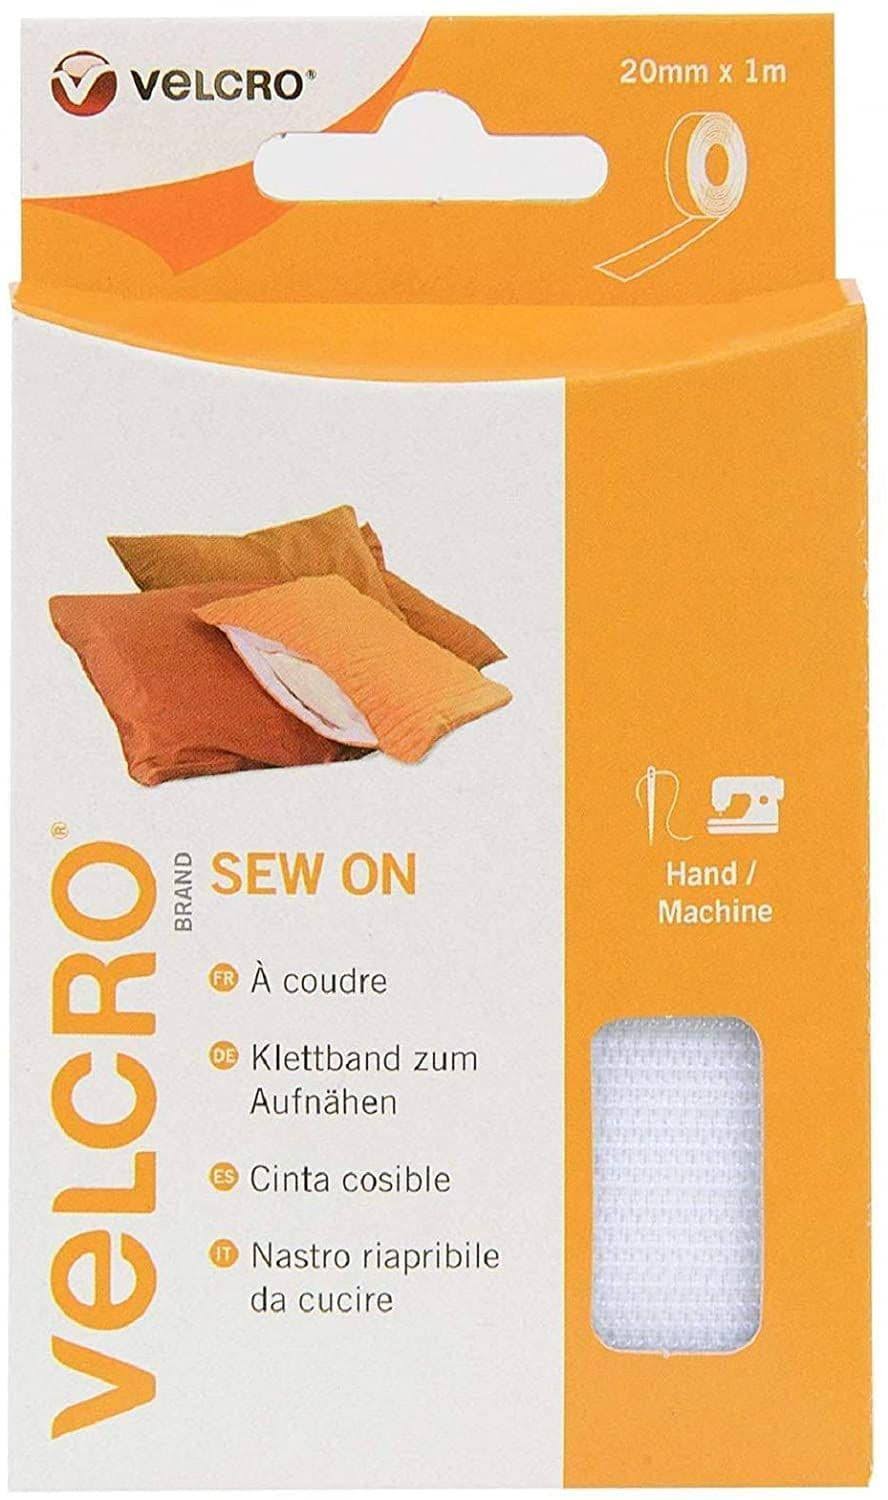 VELCRO Brand Sew on Tape 20mm x 1m White